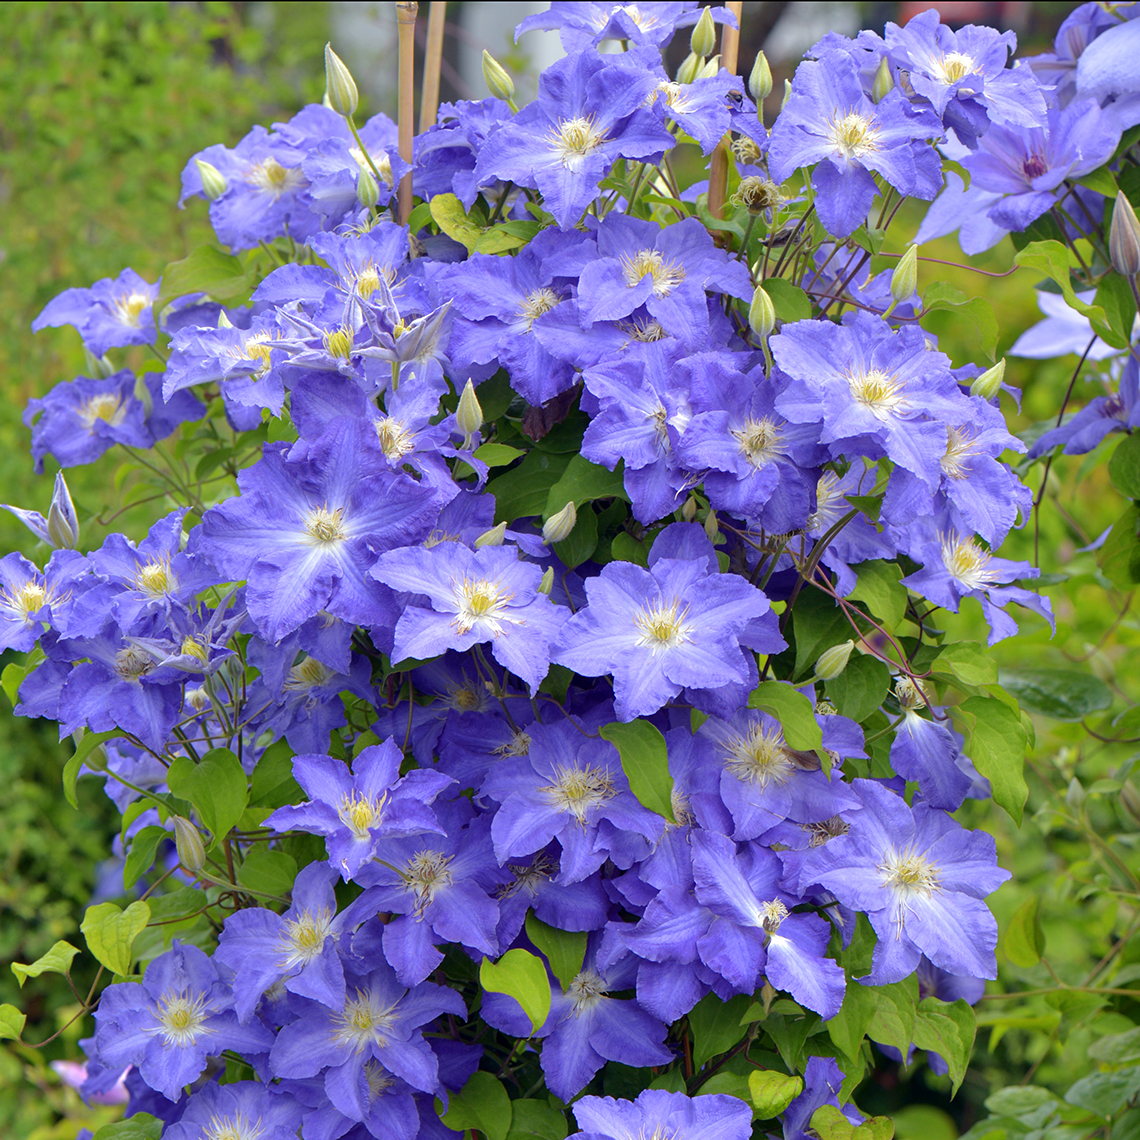 Blue flowering Brother Stefan Clematis growing on greenhouse trellis